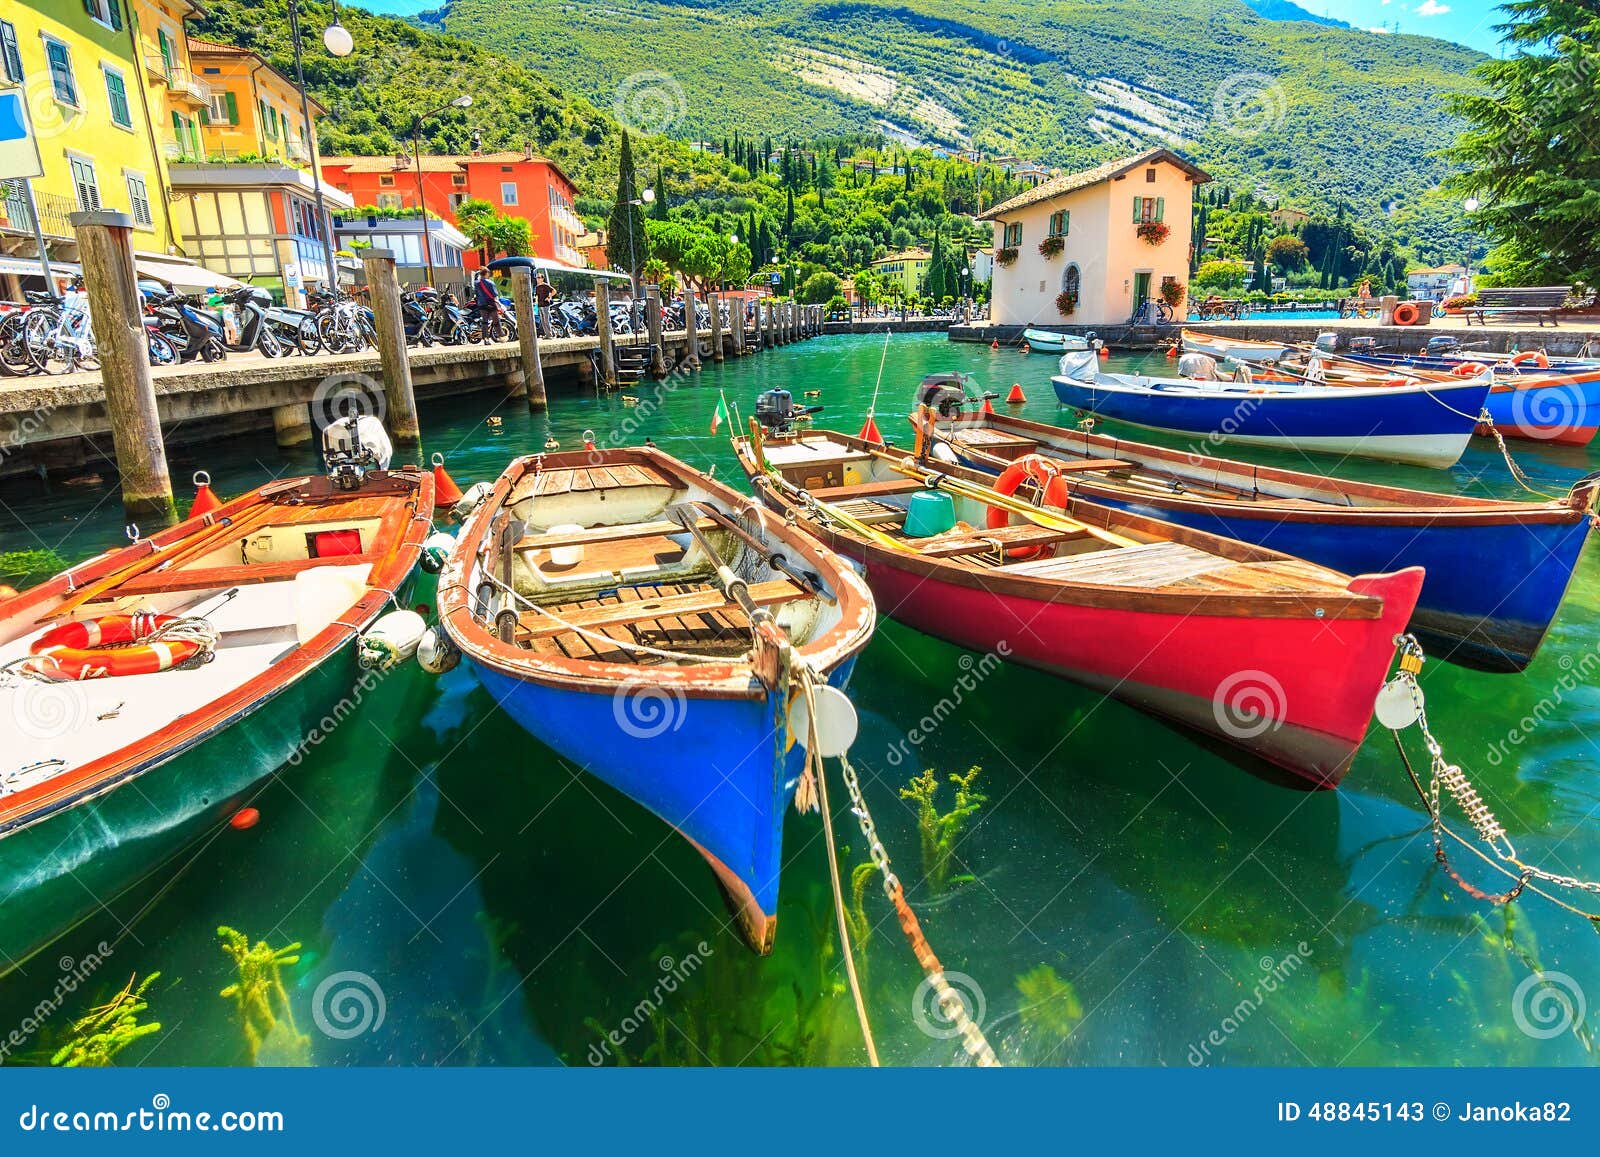 Colorful Boats On The Lake,Garda Lake,Torbole,Italy,Europe 